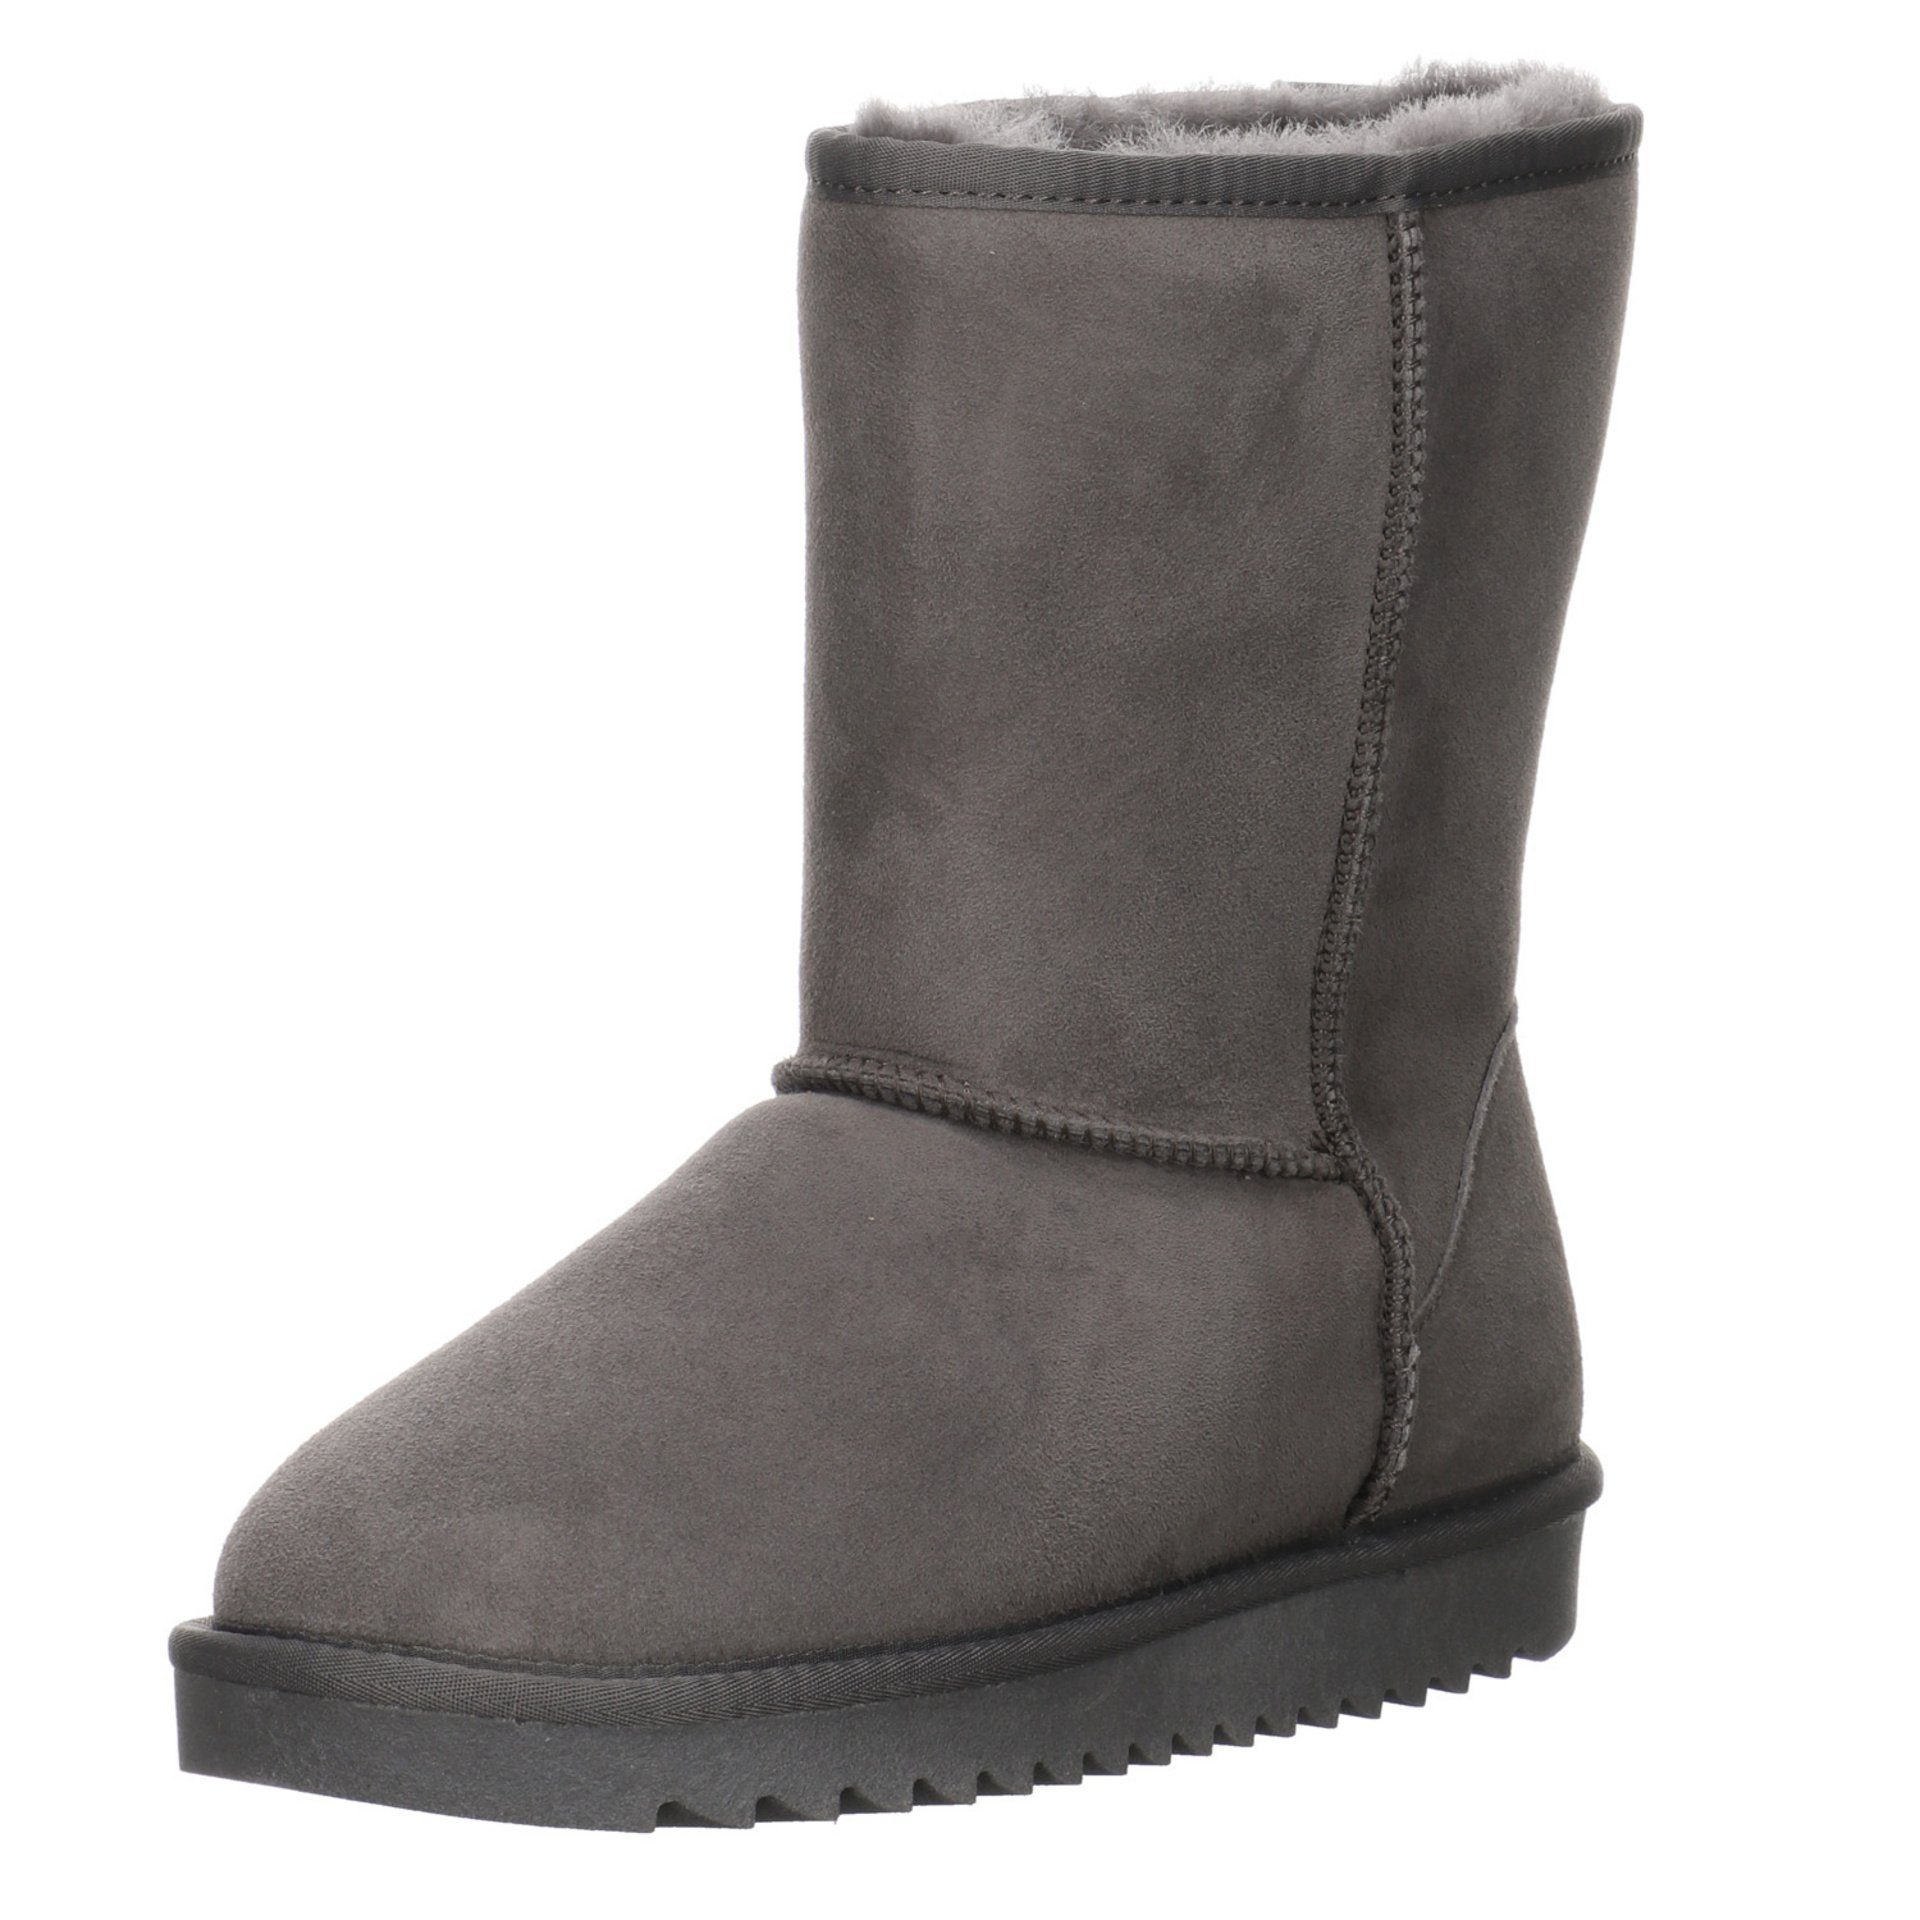 Ara Damen Stiefel Schuhe Alaska Boots Elegant Freizeit Stiefelette Veloursleder grau 049578